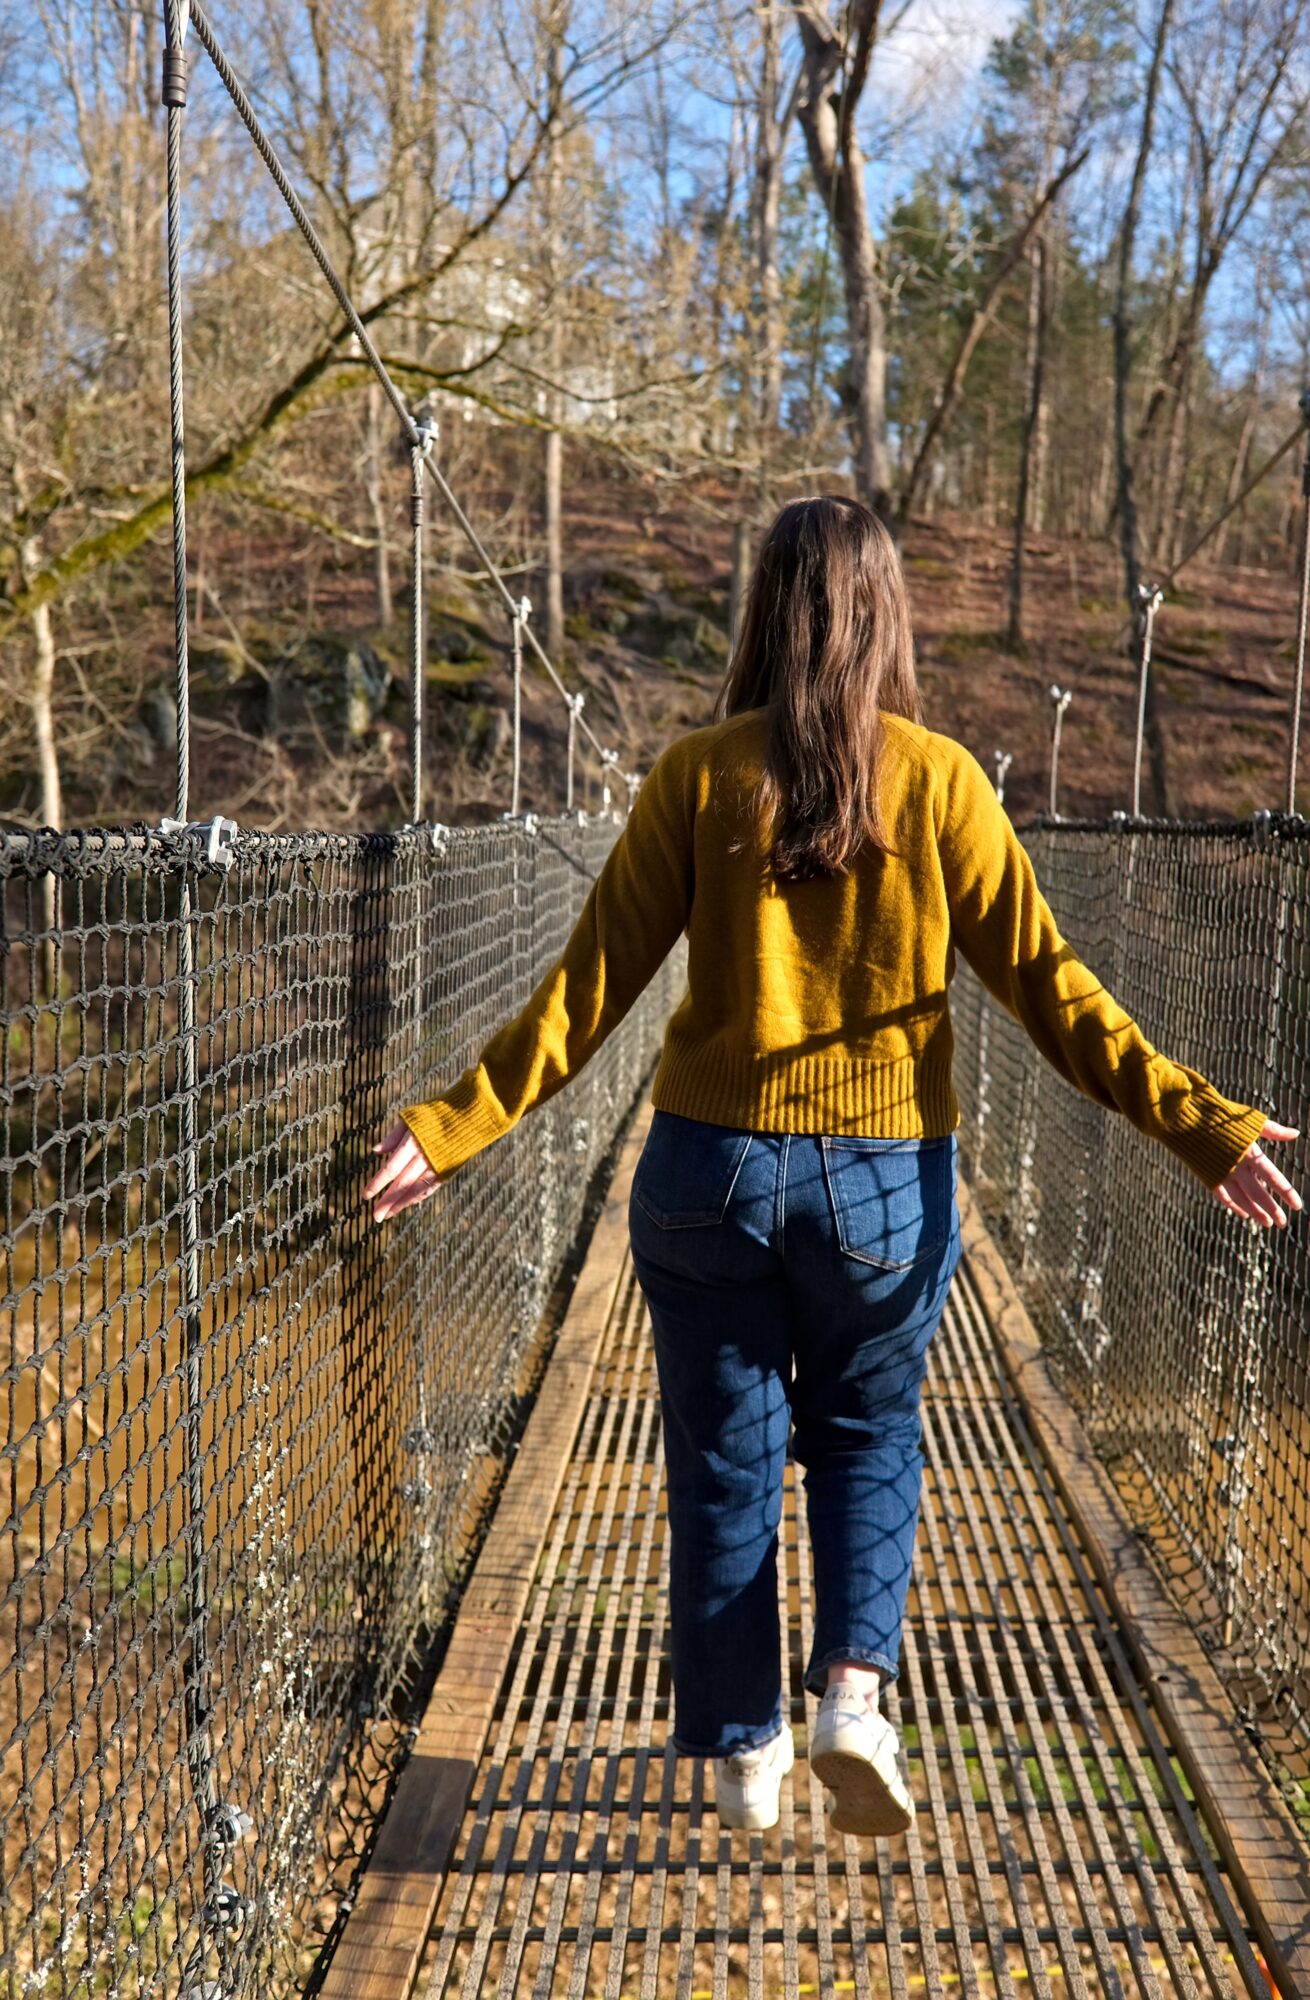 Alyssa walks on the Carolina Thread Trail Suspension Bridge and runs her fingers over the sides